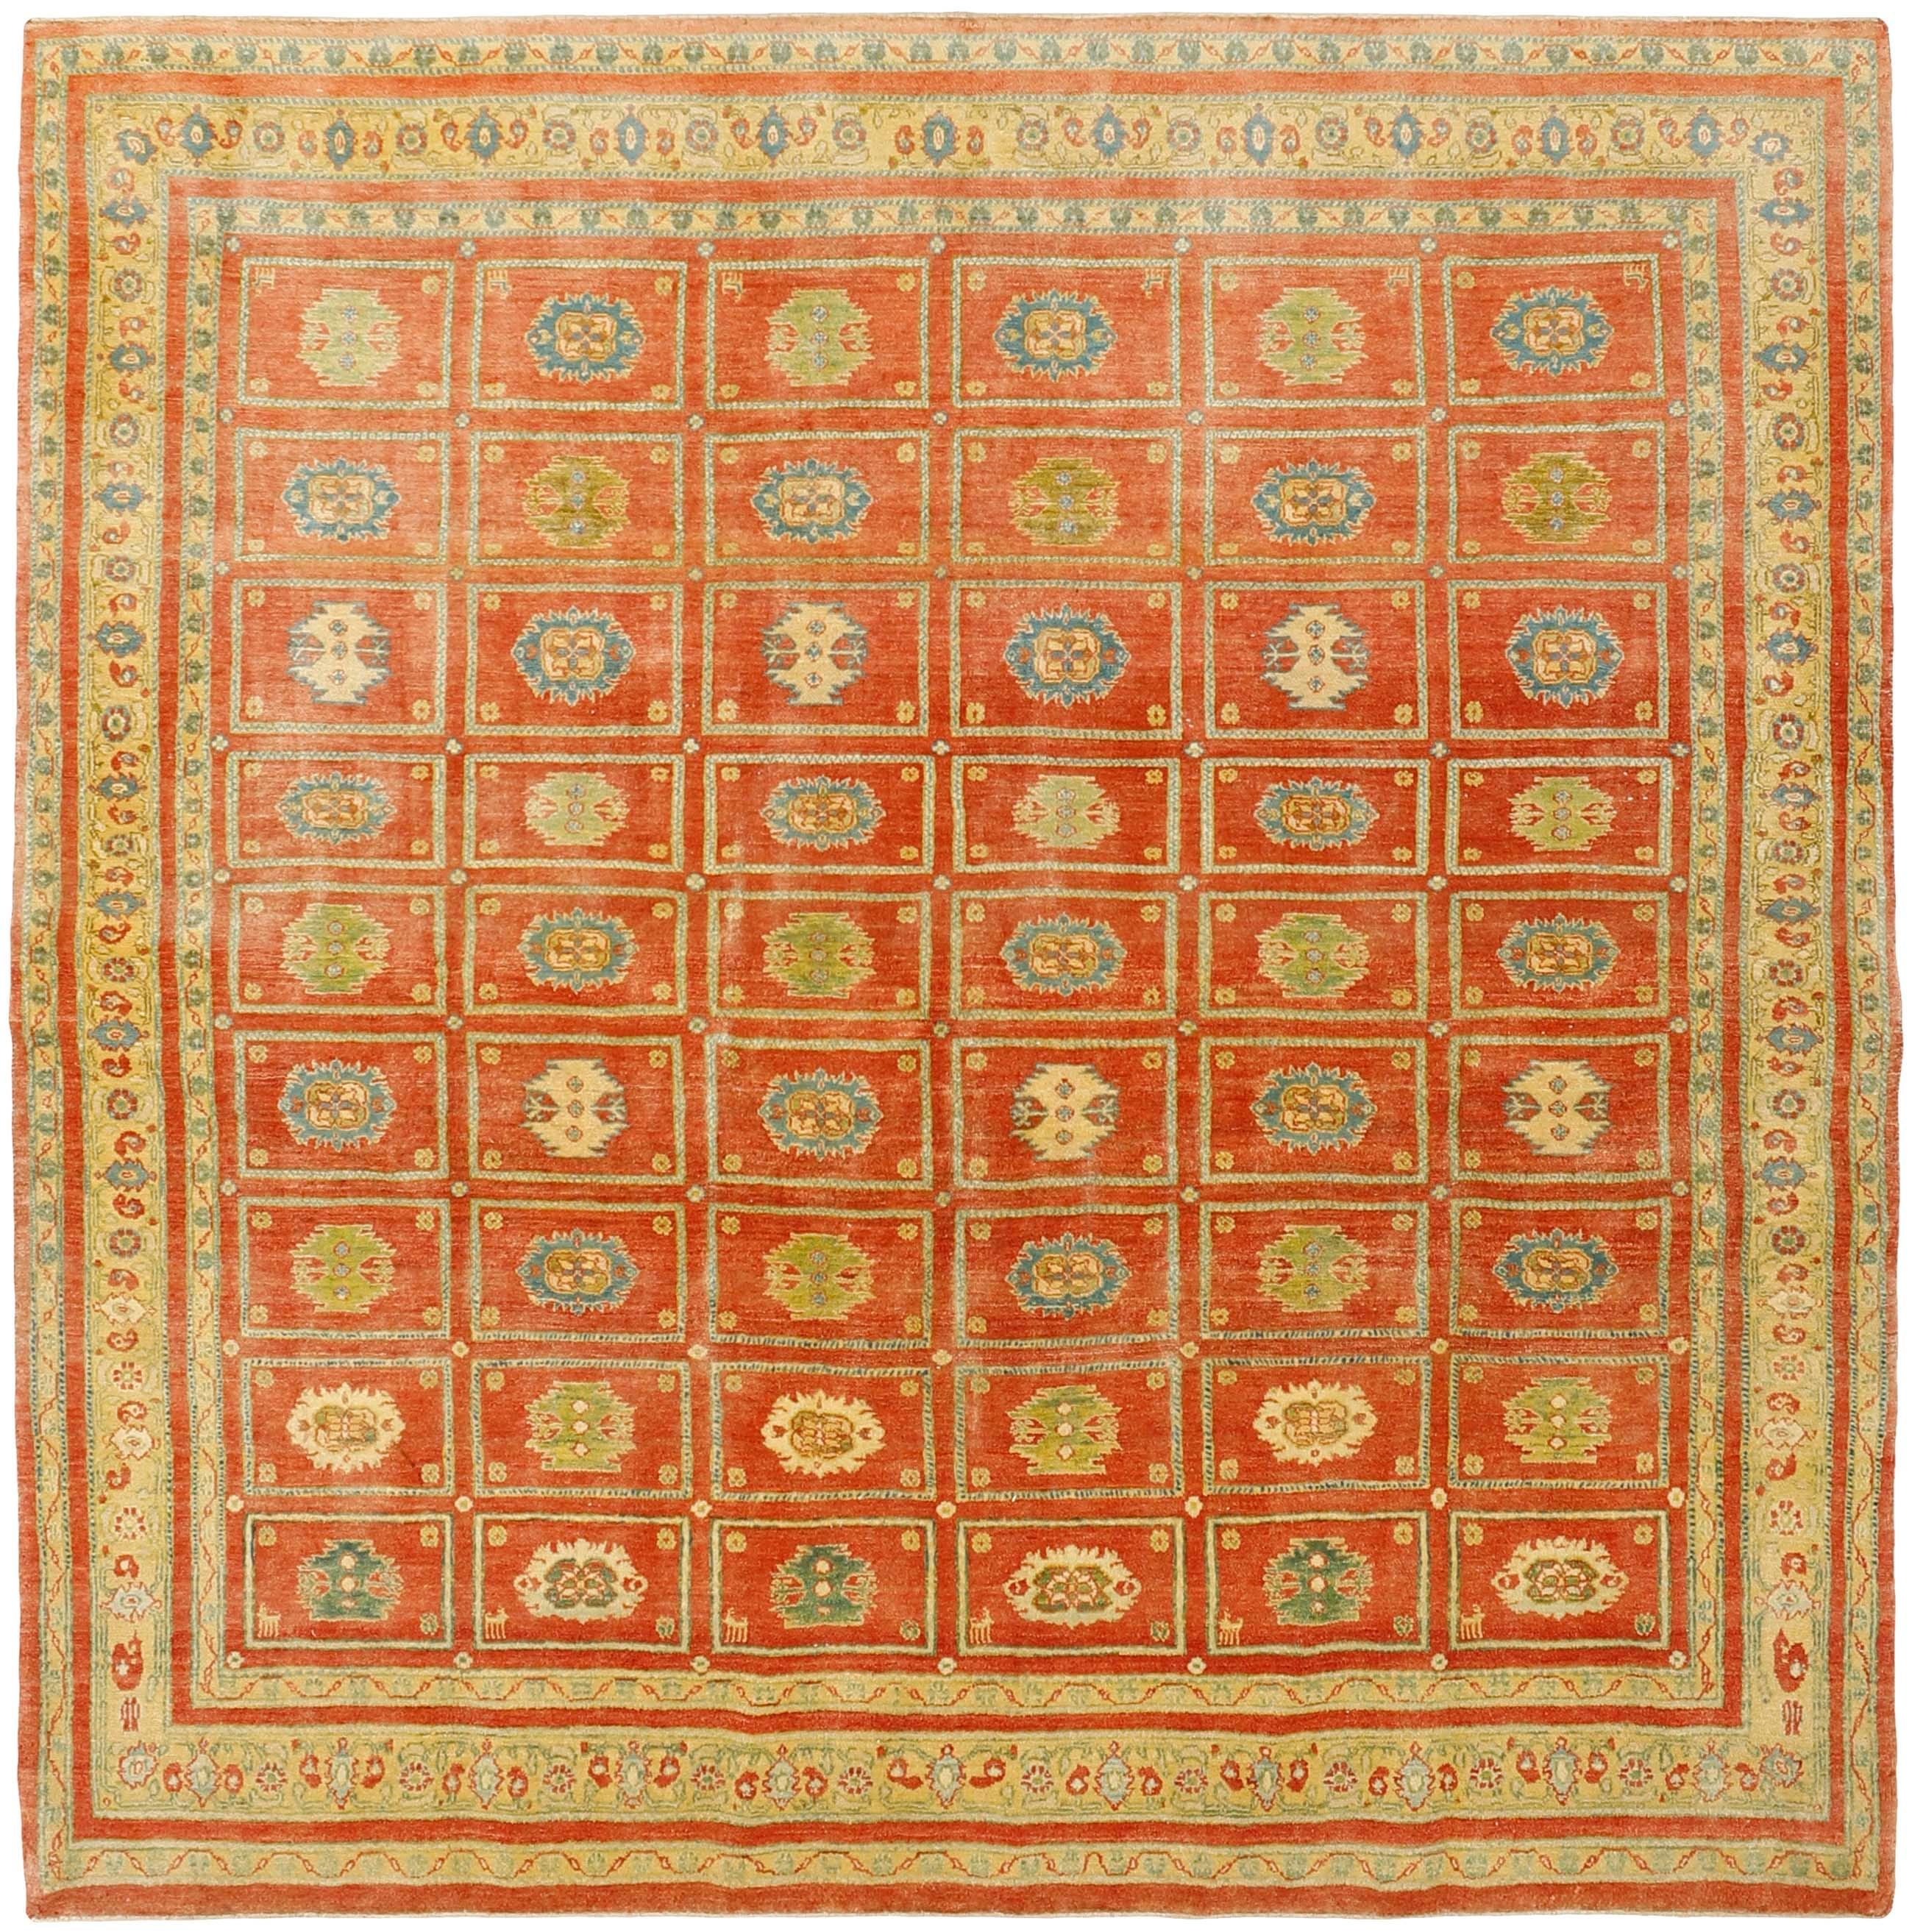 Orange square Persian rug with tribal geometric design